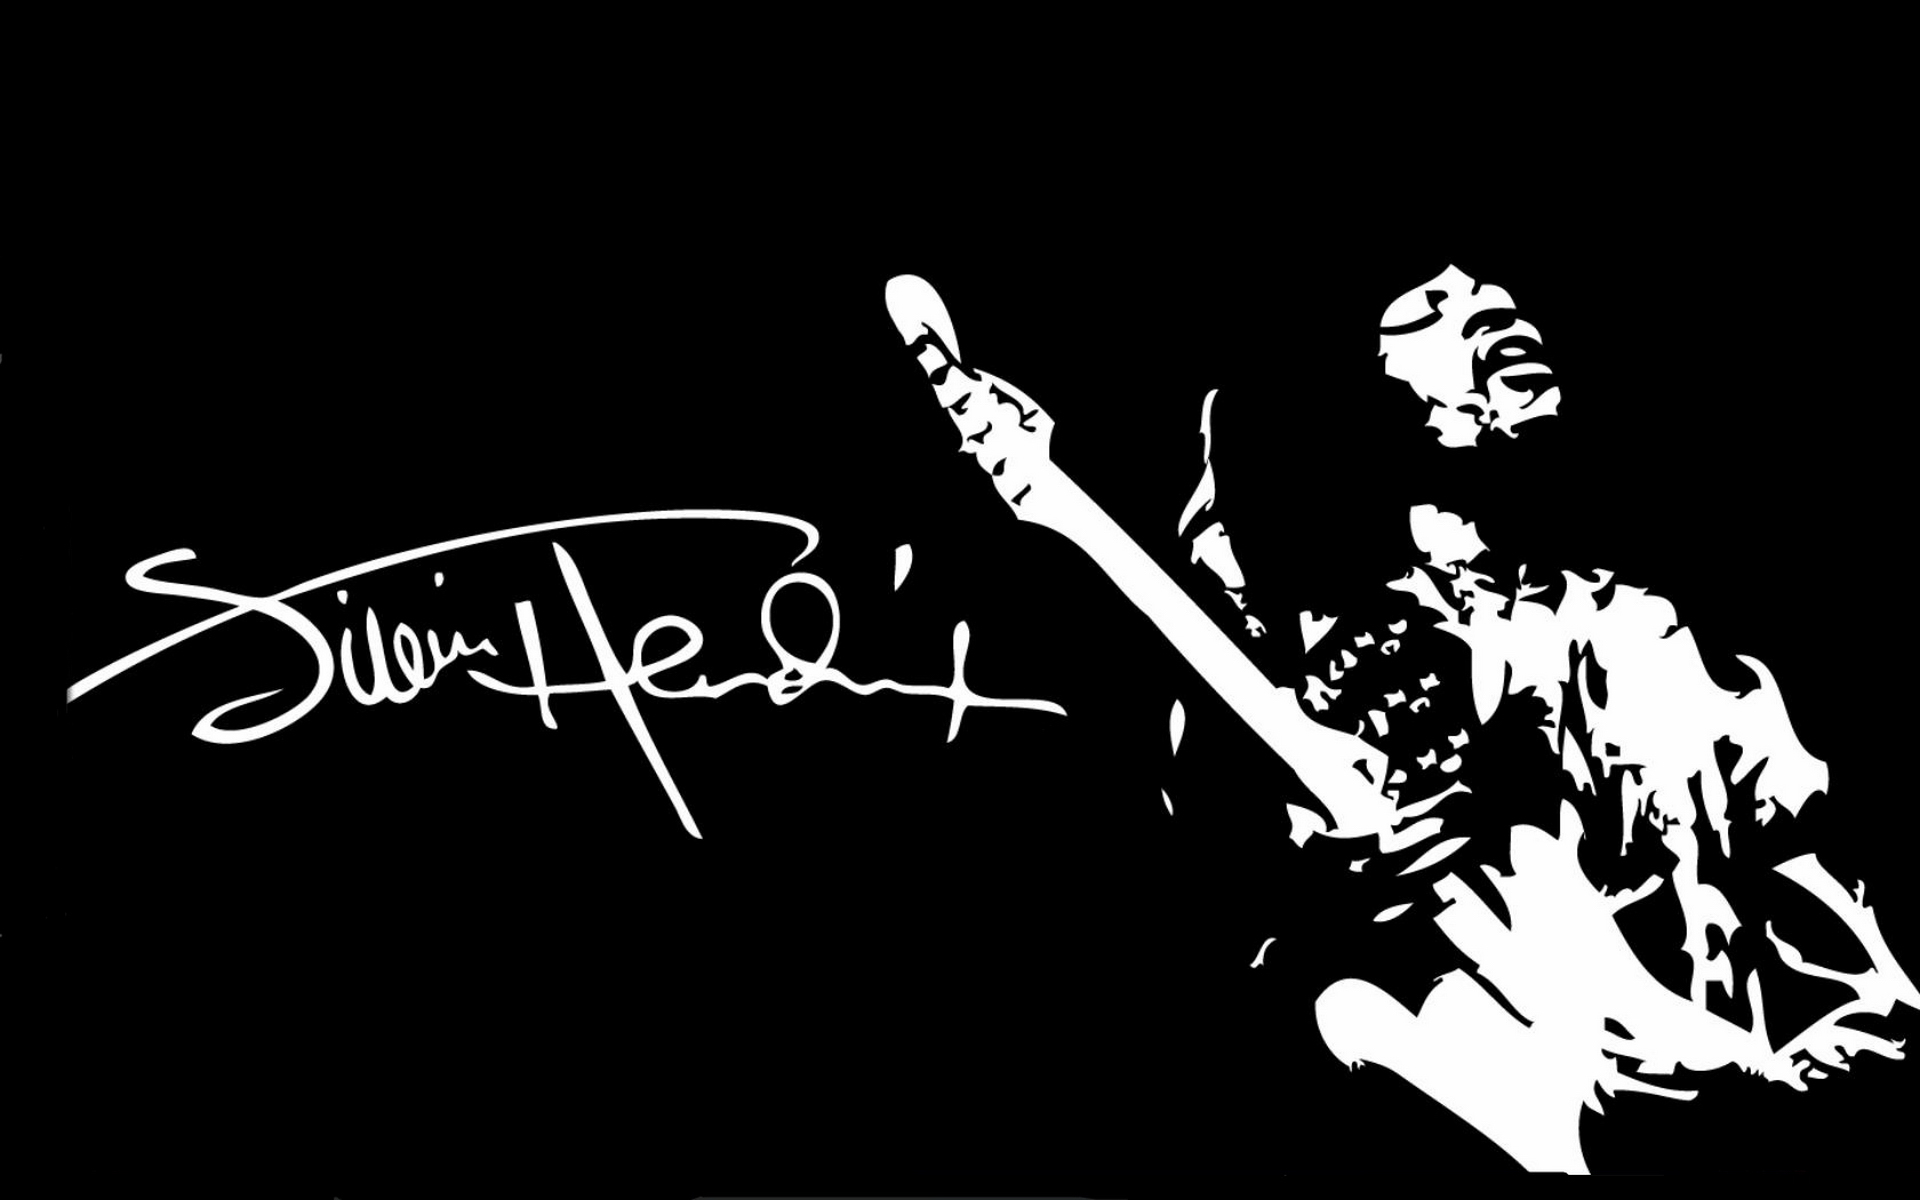 Jimi Hendrix Mobile Wallpaper  Jimi Hendrix Wallpaper Iphone 6 Transparent  PNG  485x550  Free Download on NicePNG